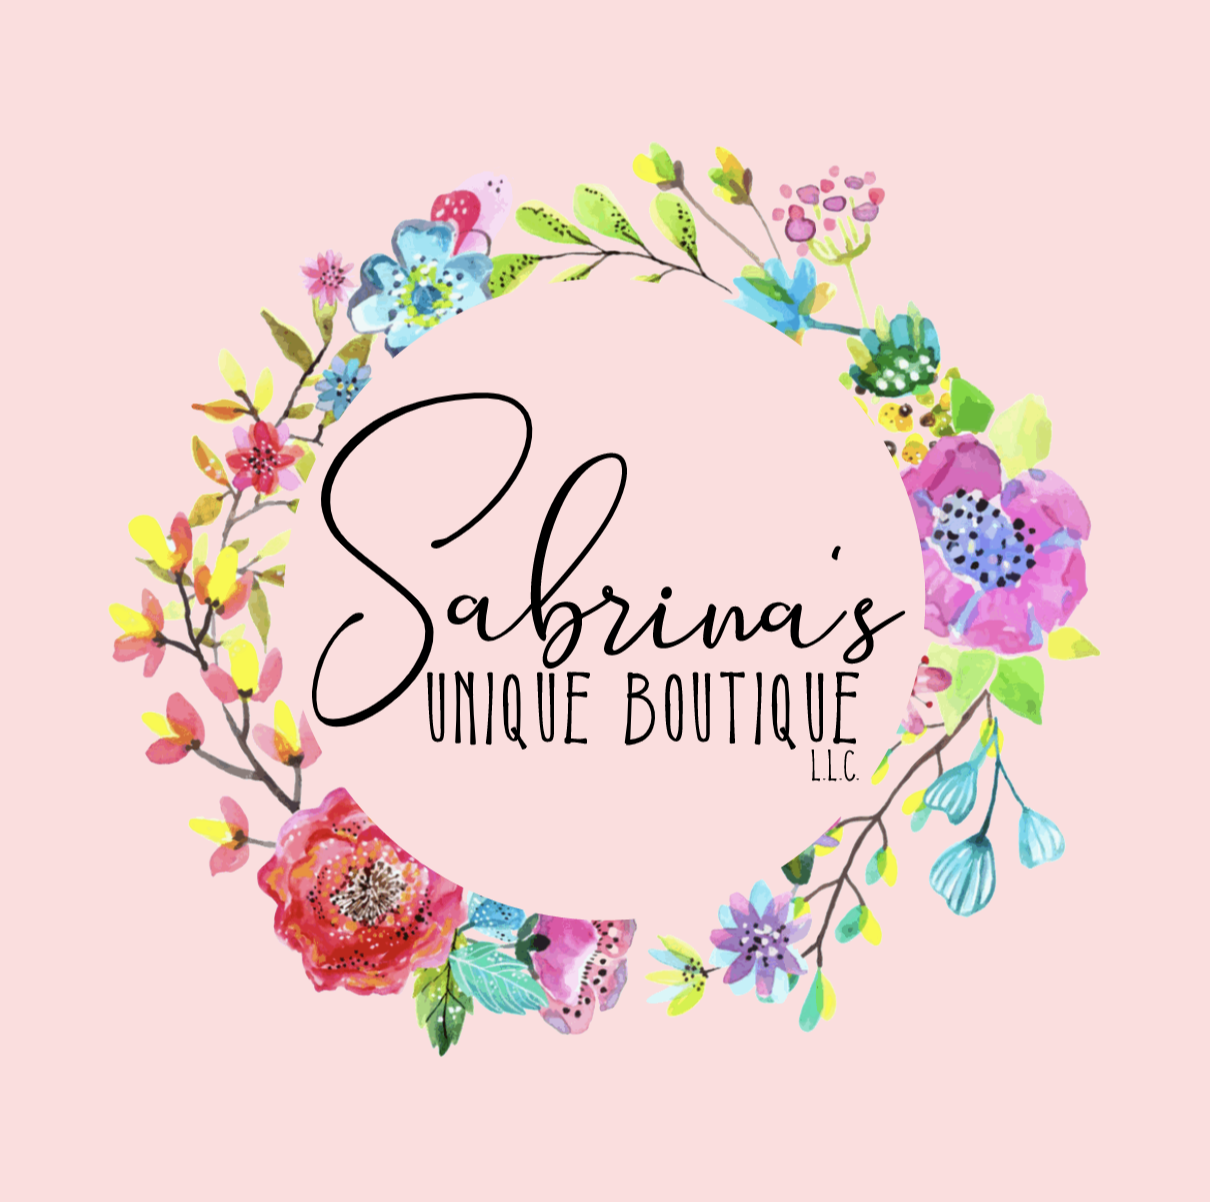 Sabrina's Unique Boutique LLC